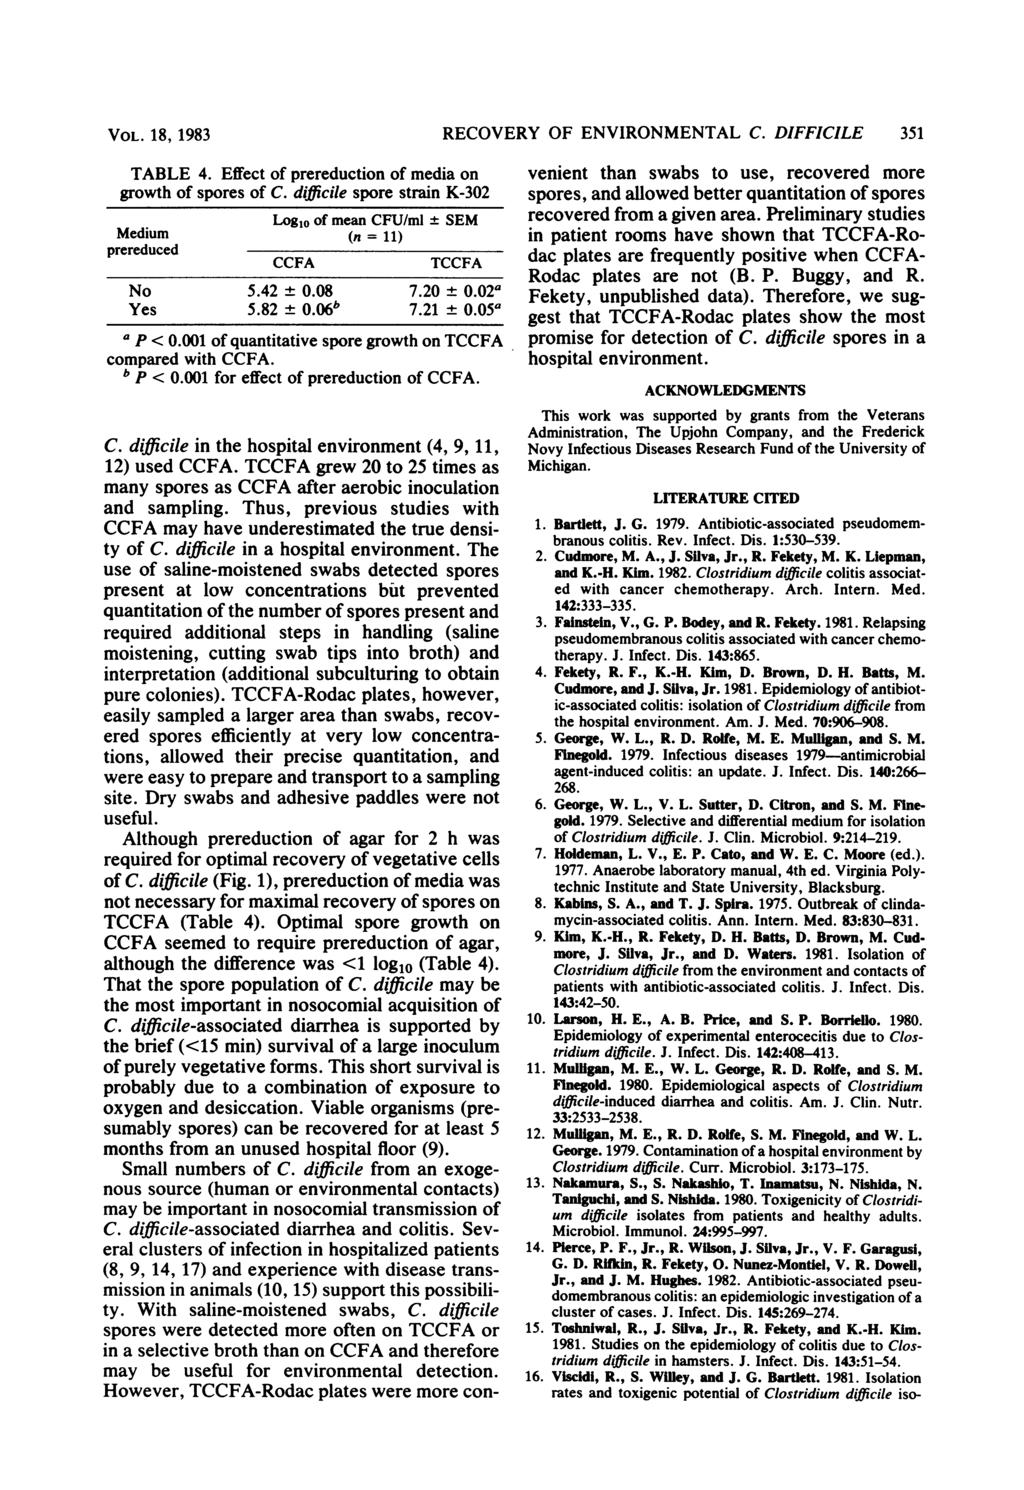 VOL. 18, 1983 TABLE 4. Effect of prereduction of media on growth of spores of C. difficile spore strain K-302 Logl0 of mean CFU/ml + SEM Medium (n = 11) prereduced CCFA TCCFA No 5.42 ± 0.08 7.20 ± 0.